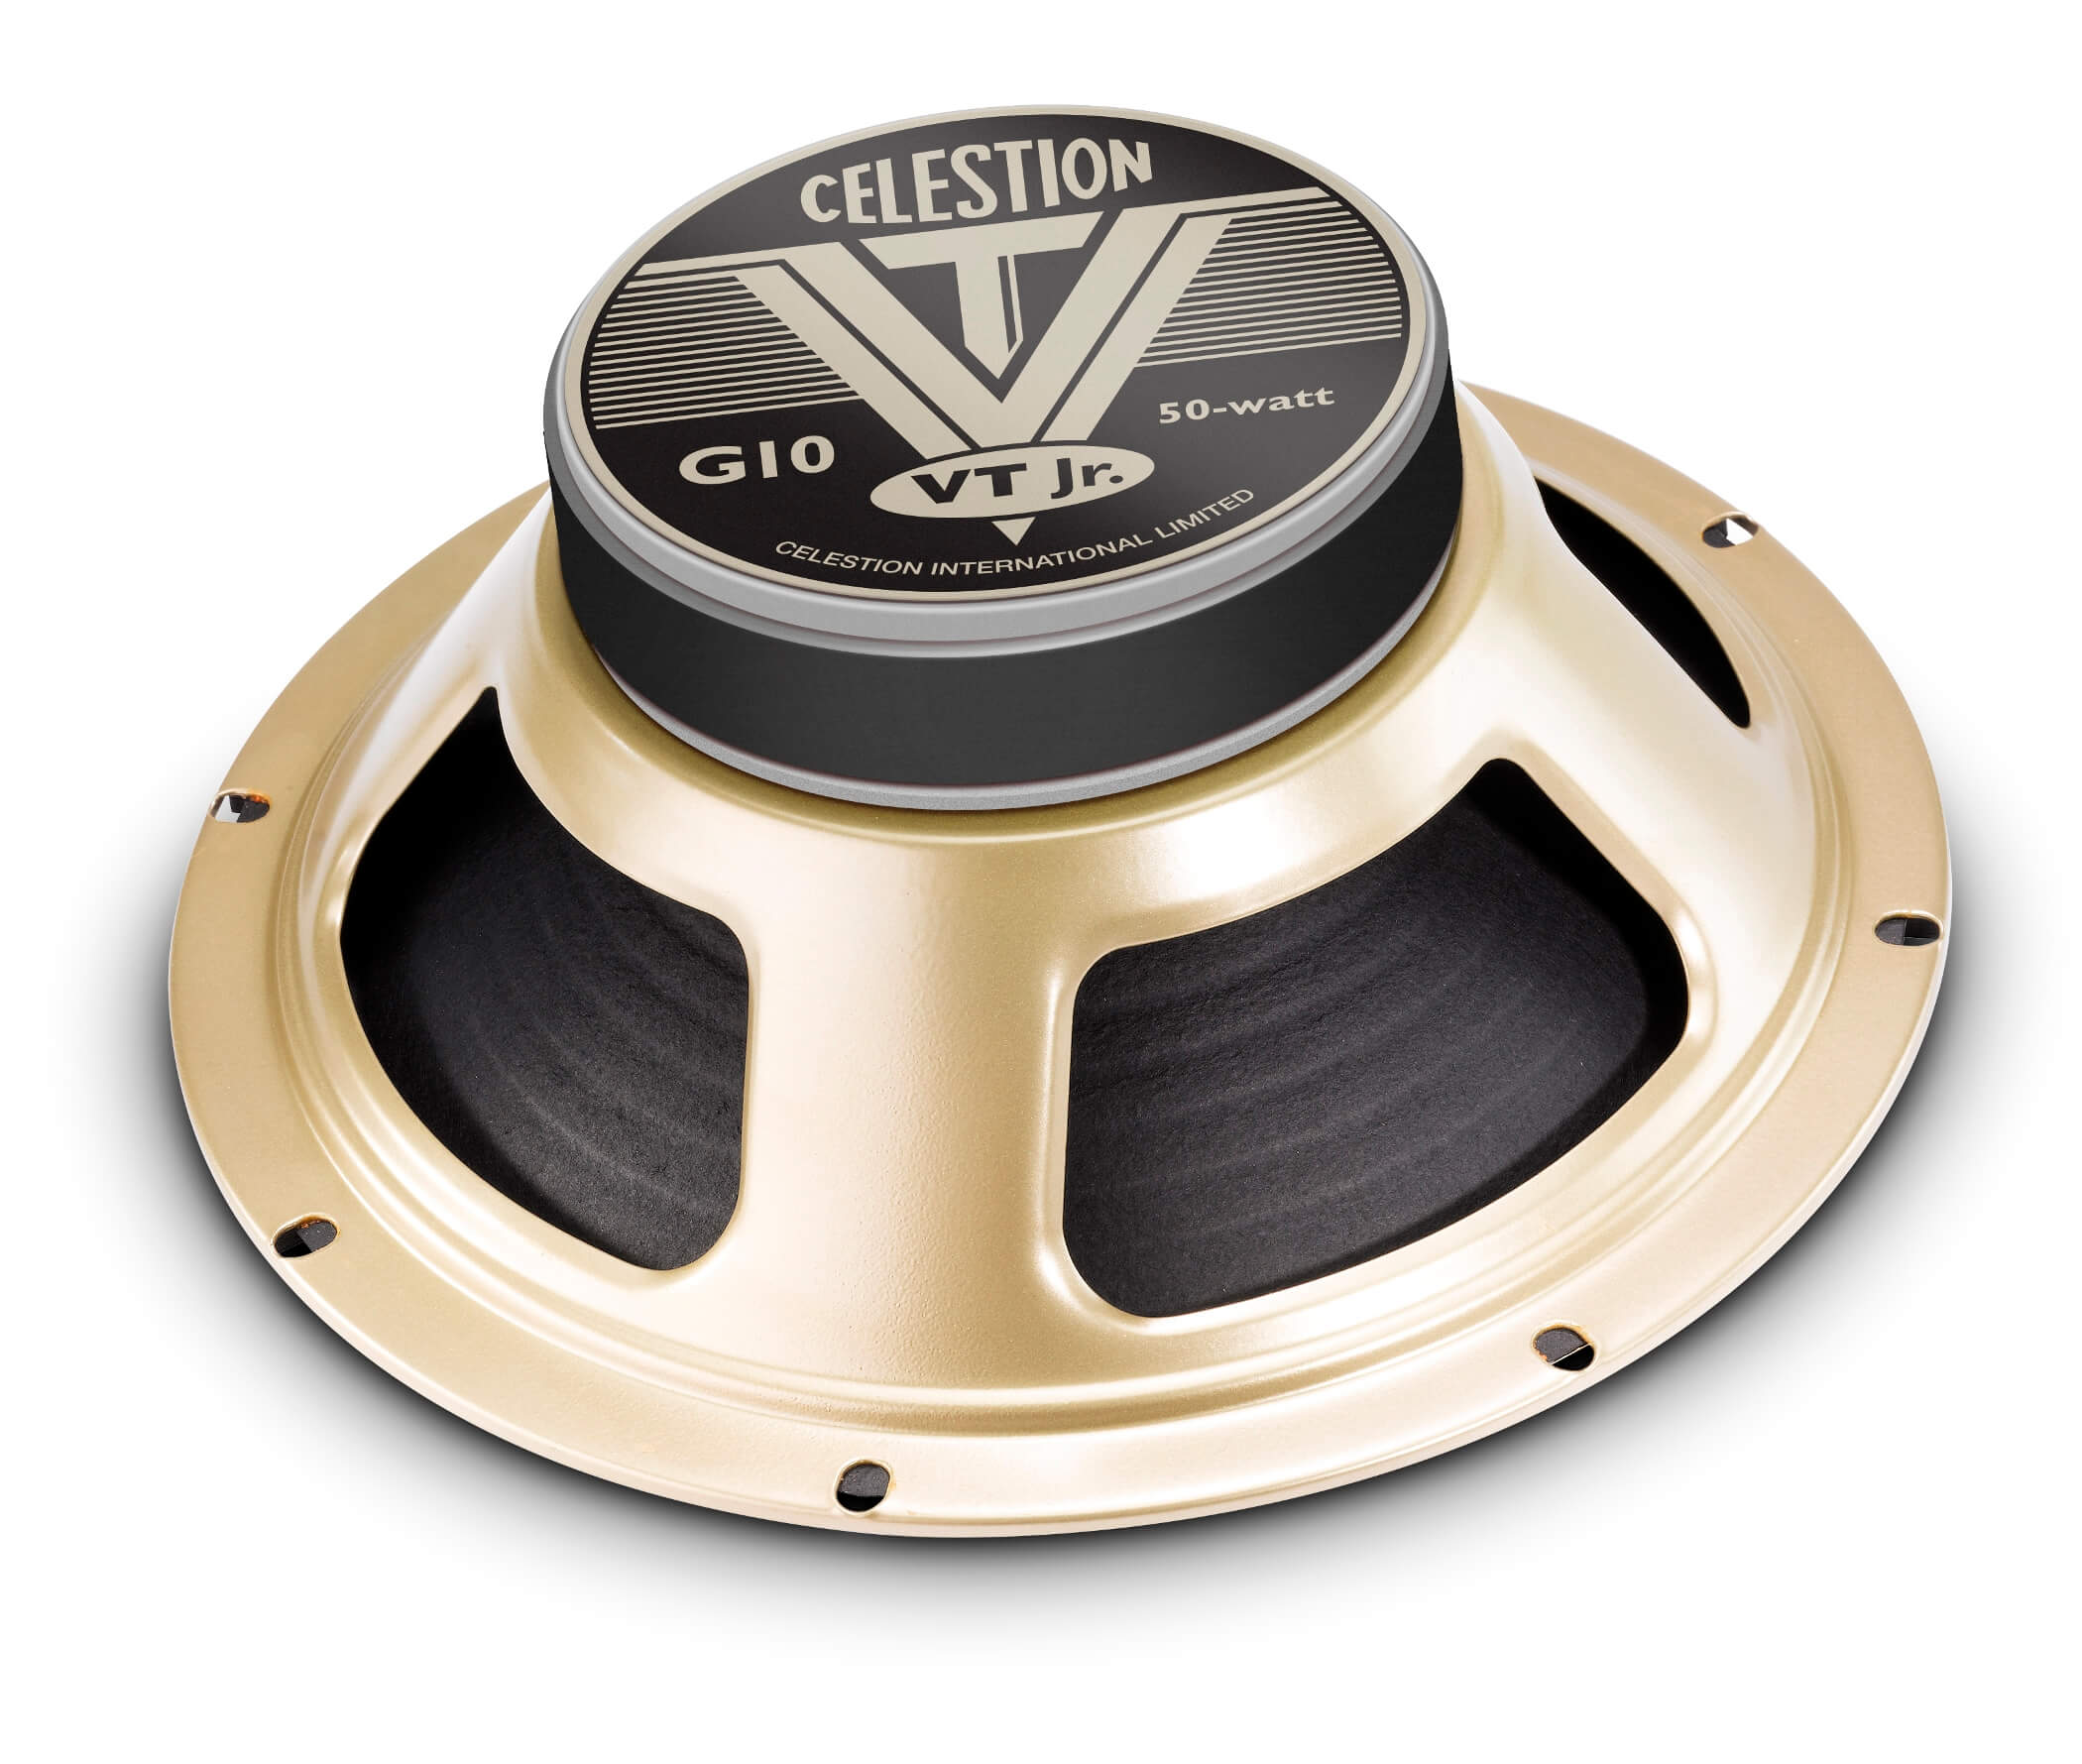 Celestion G10 VT-Junior 8 ohm 10